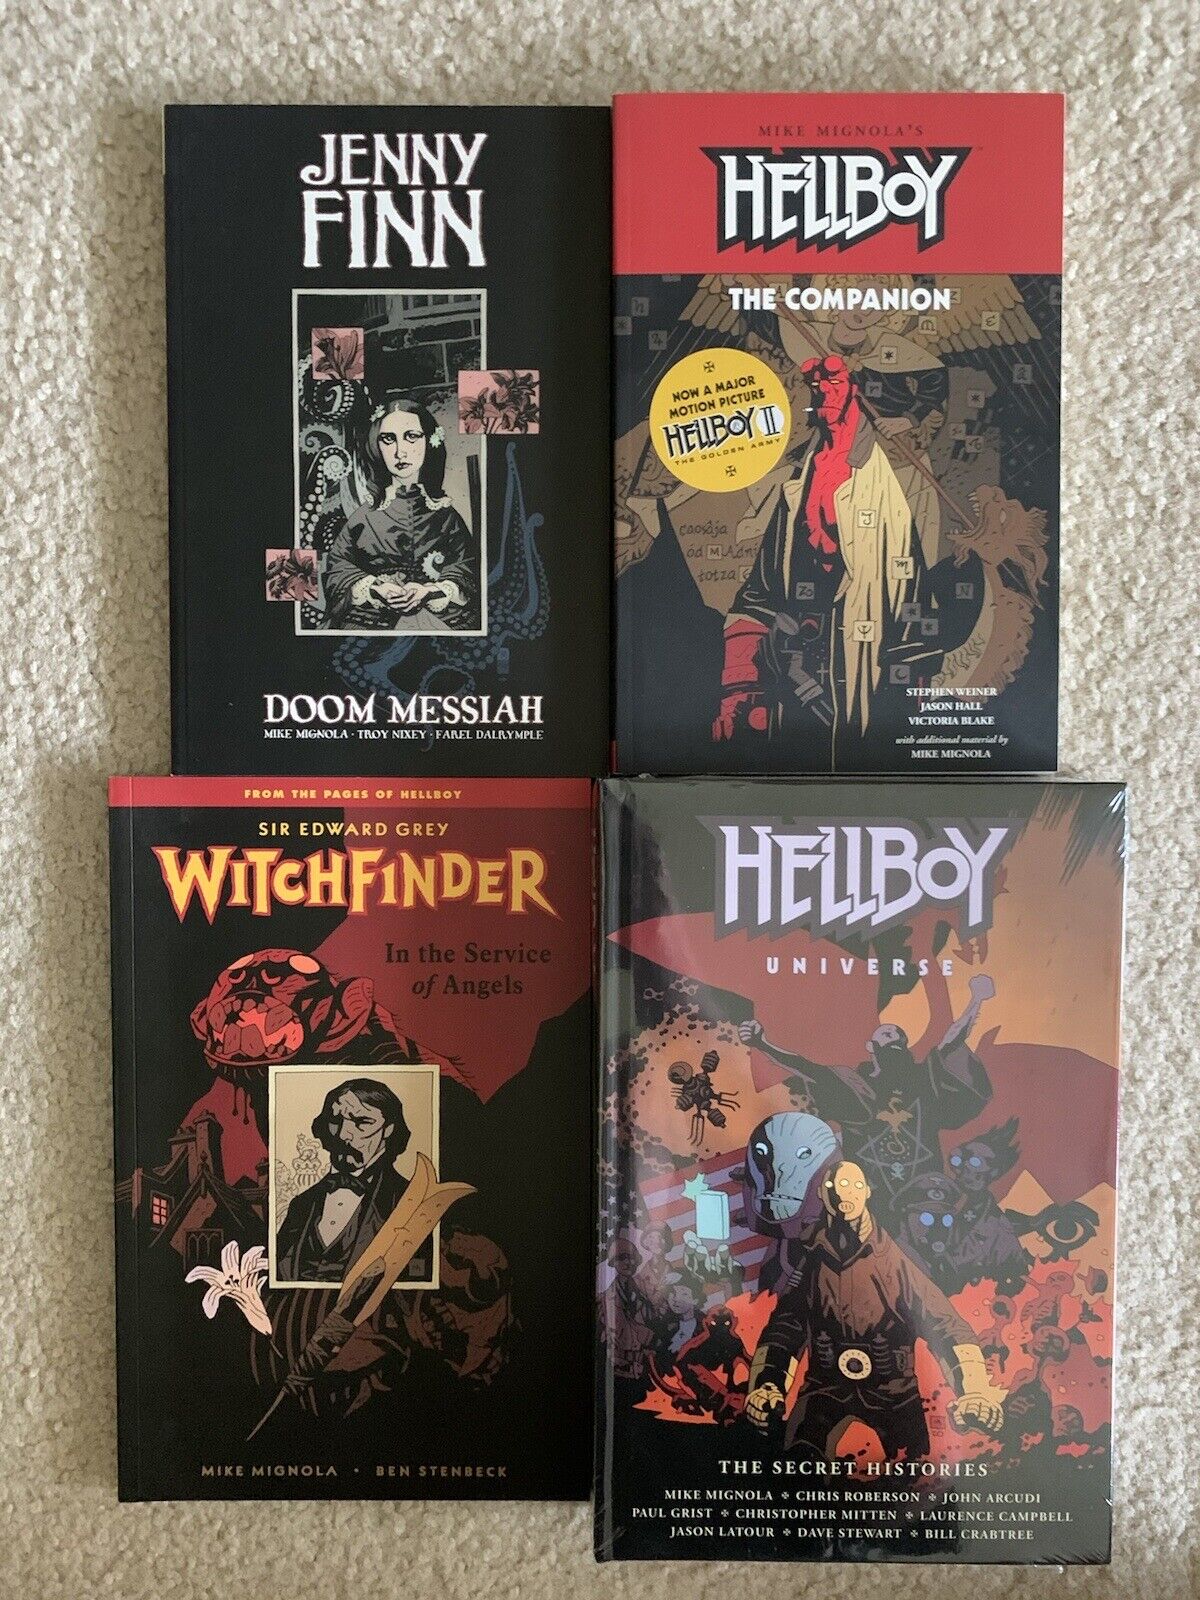 Hellboy Universe Books: Secret Histories HC (Sealed), Jenny Finn, Witchfinder